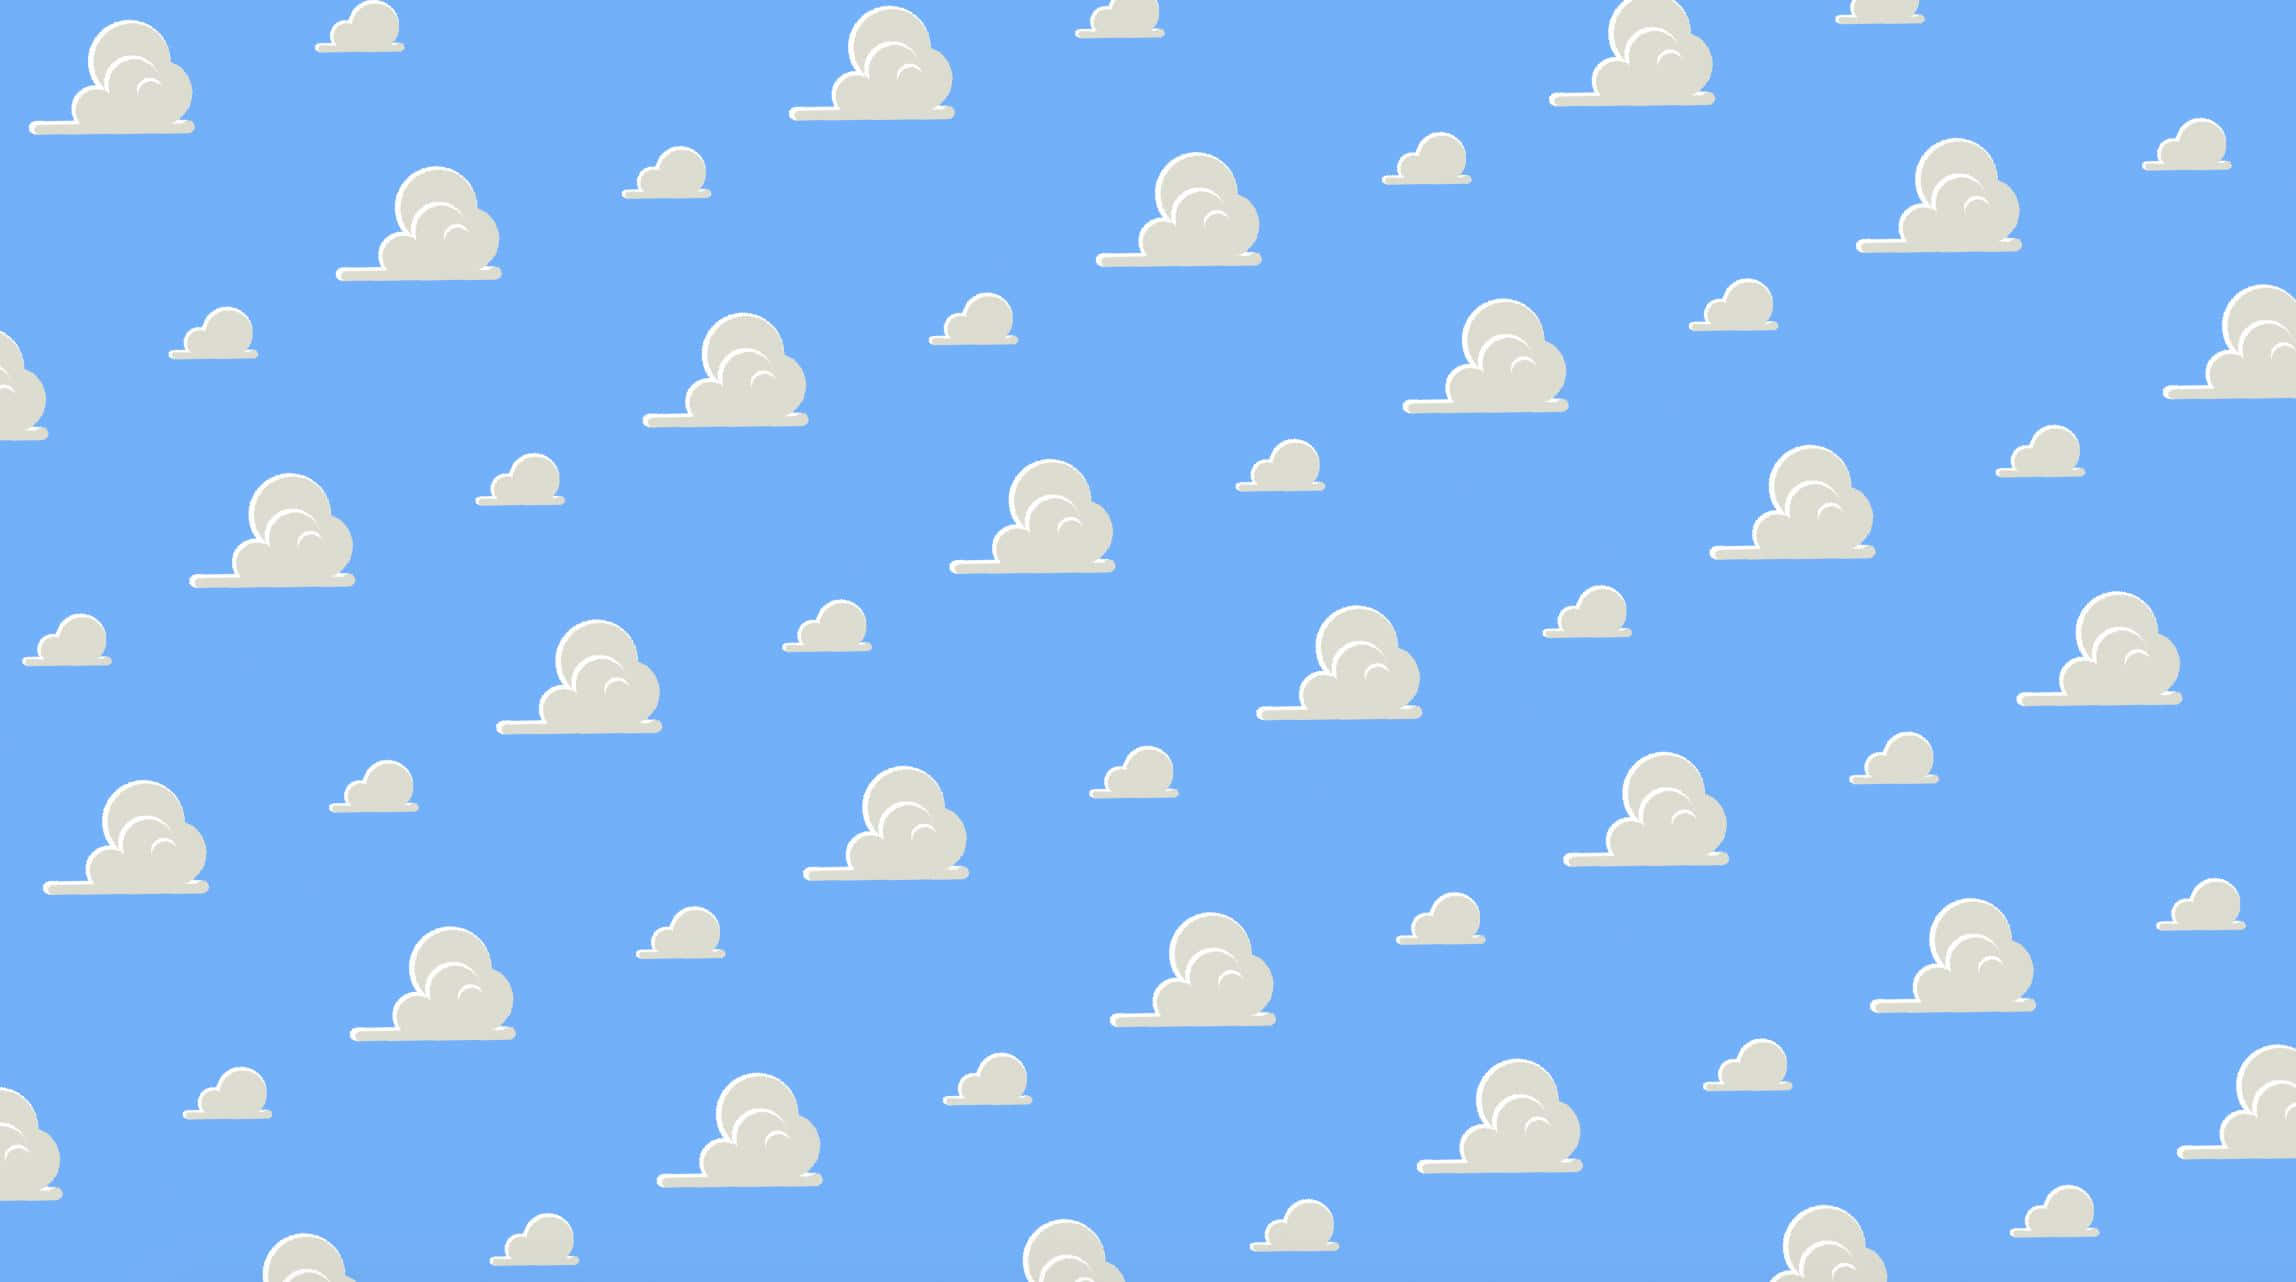 Sfondodi Toy Story: Avventura Tra Le Nuvole